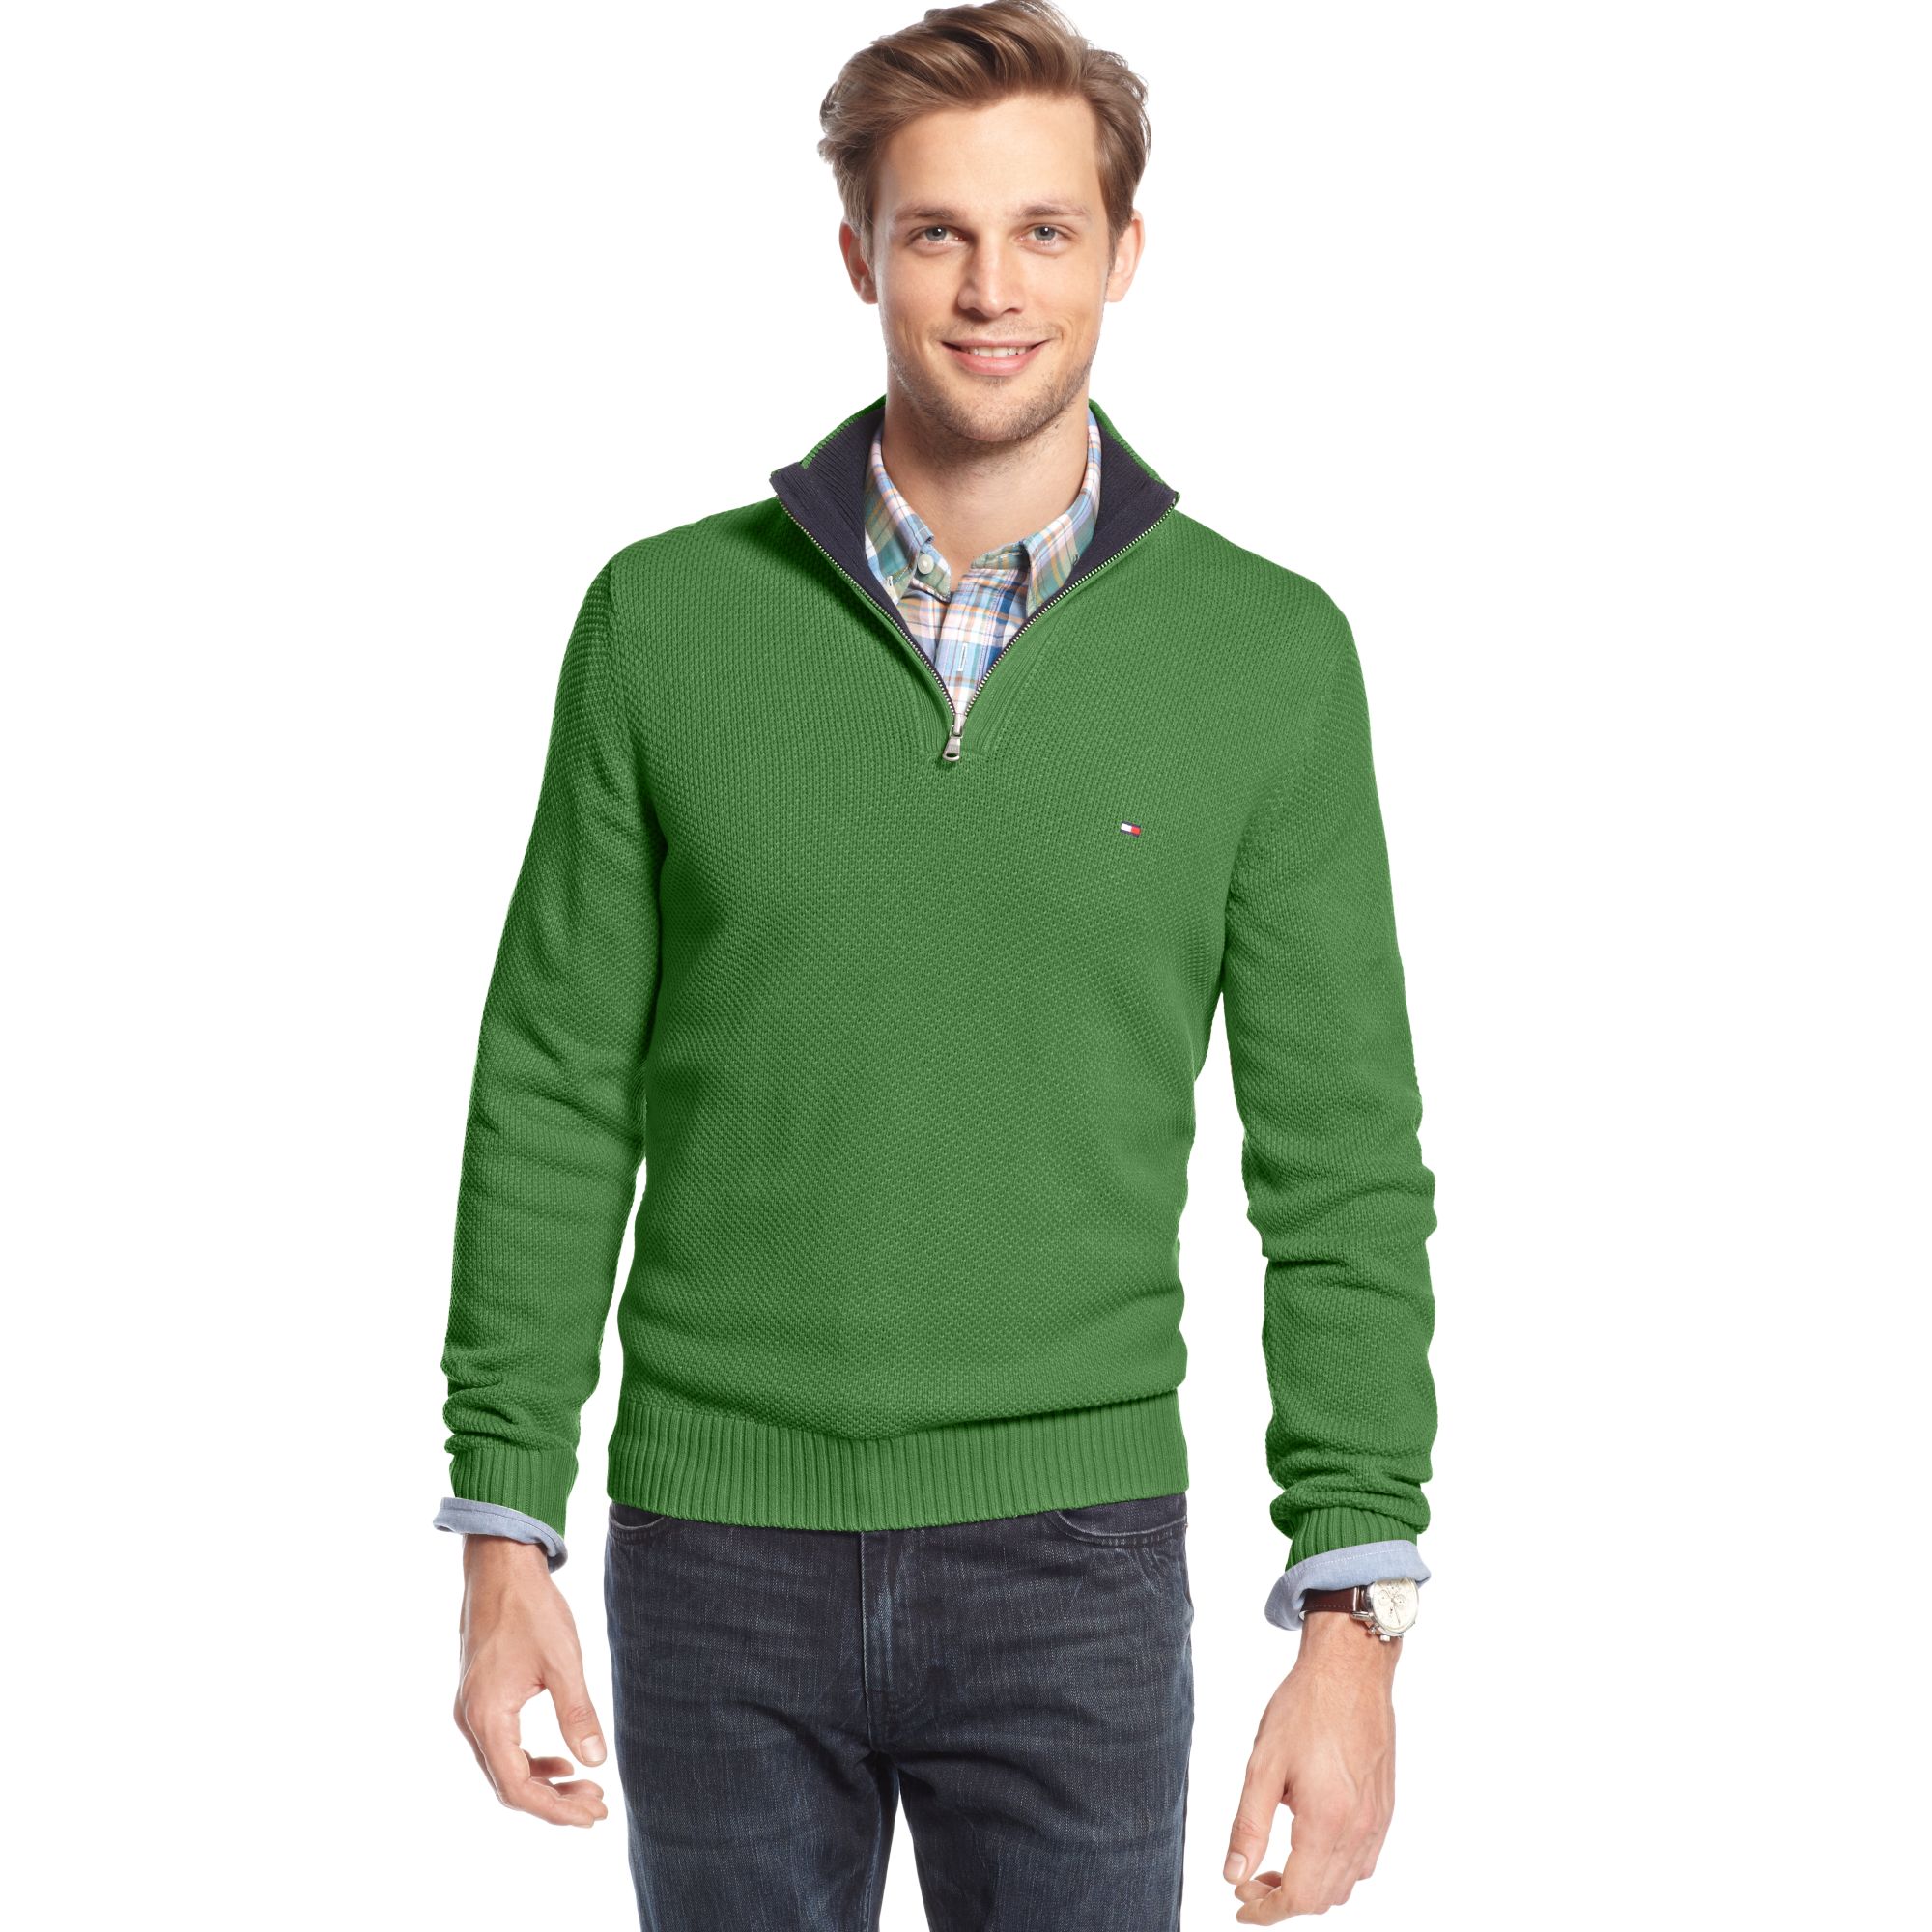 Lyst - Tommy Hilfiger Cooper Half Zip Sweater in Green for Men